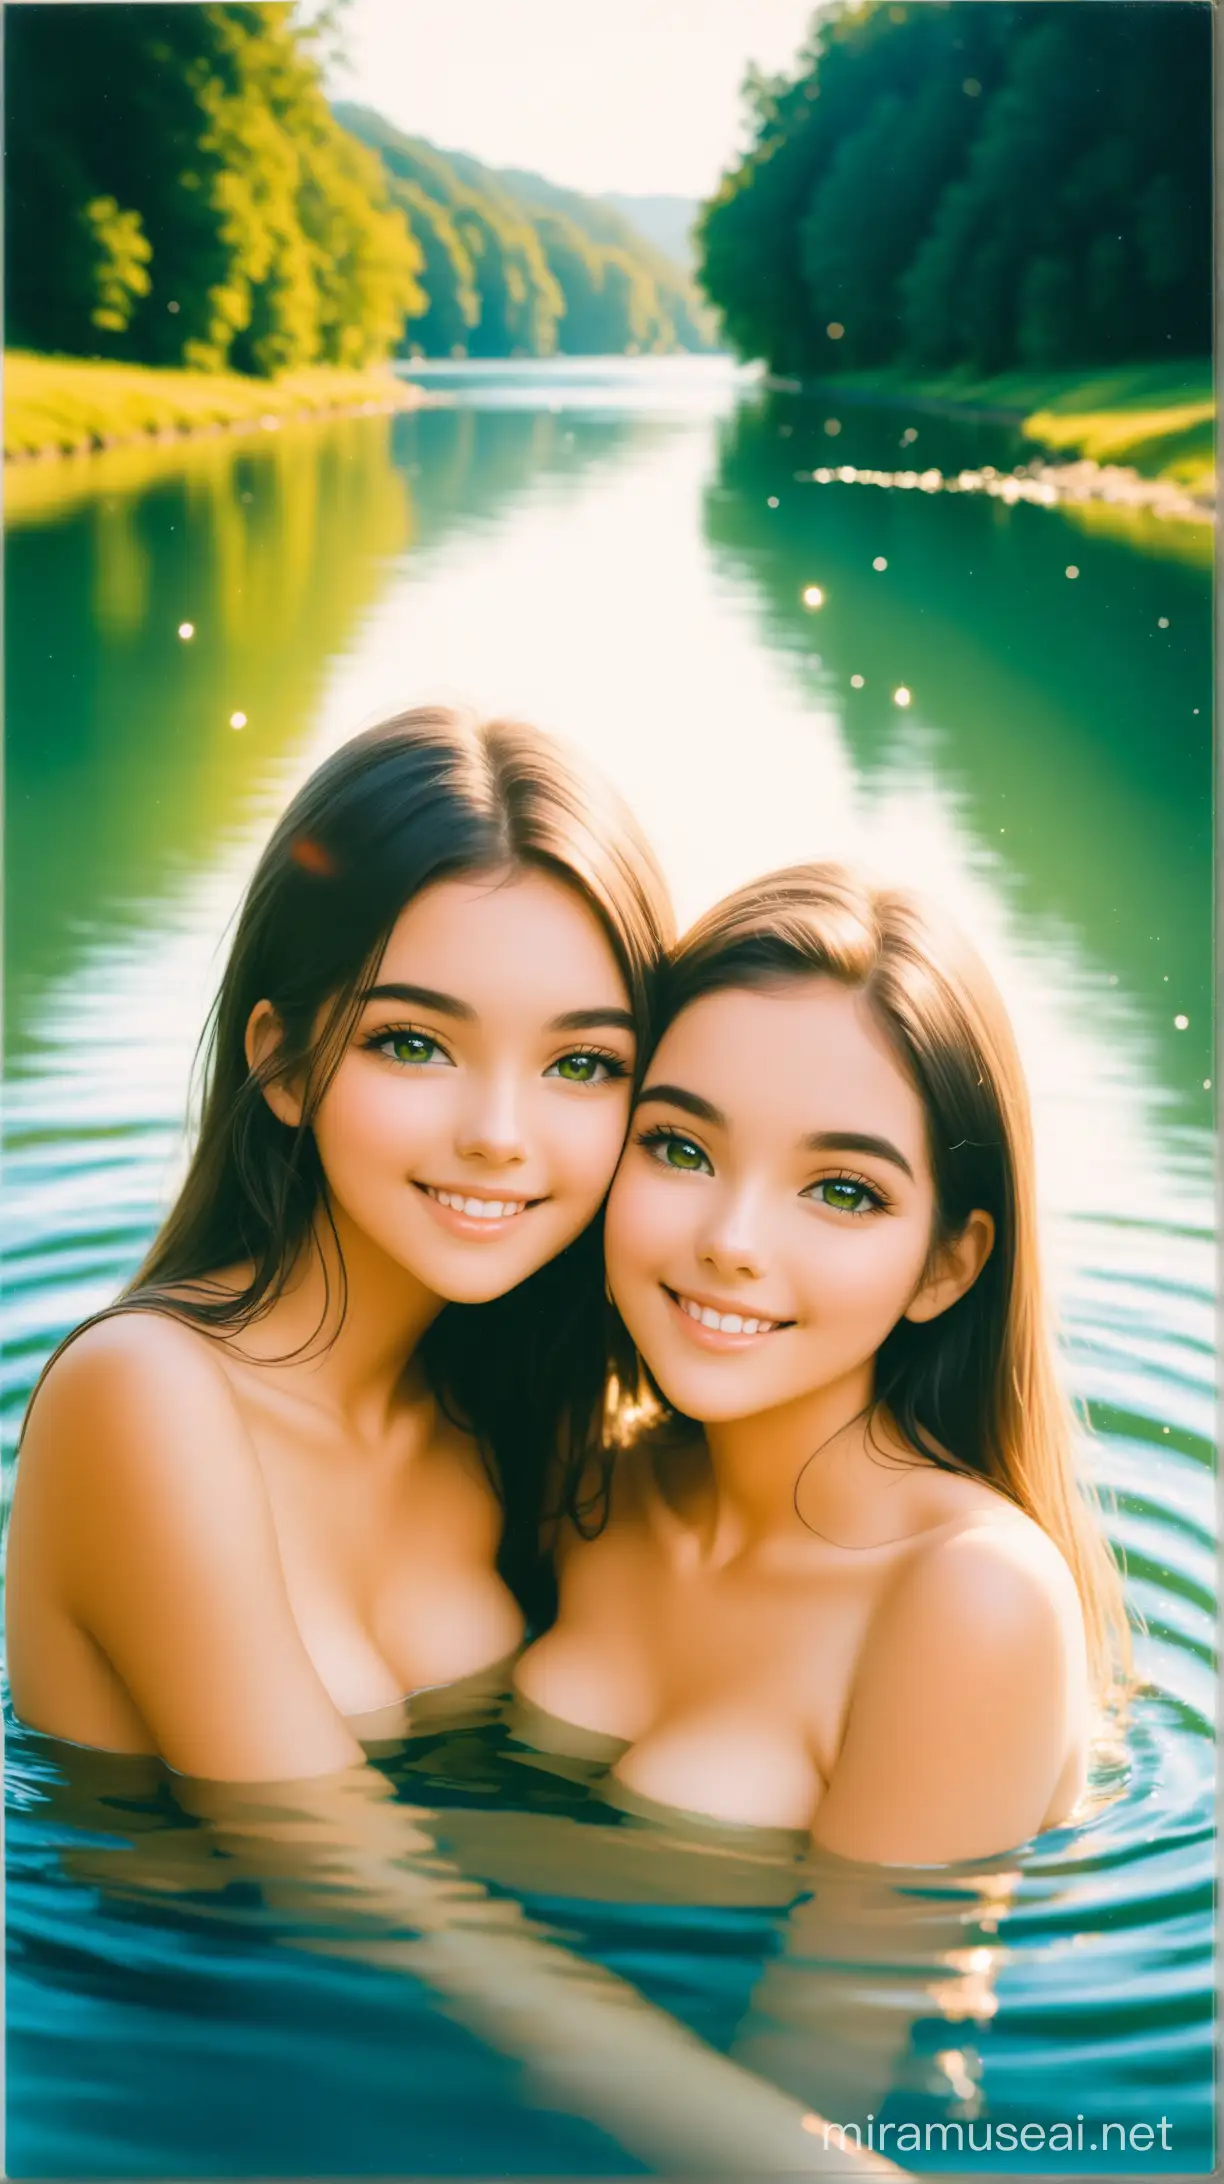 Romantic Underwater Embrace Two Women in Love Smiling in Beautiful River Landscape